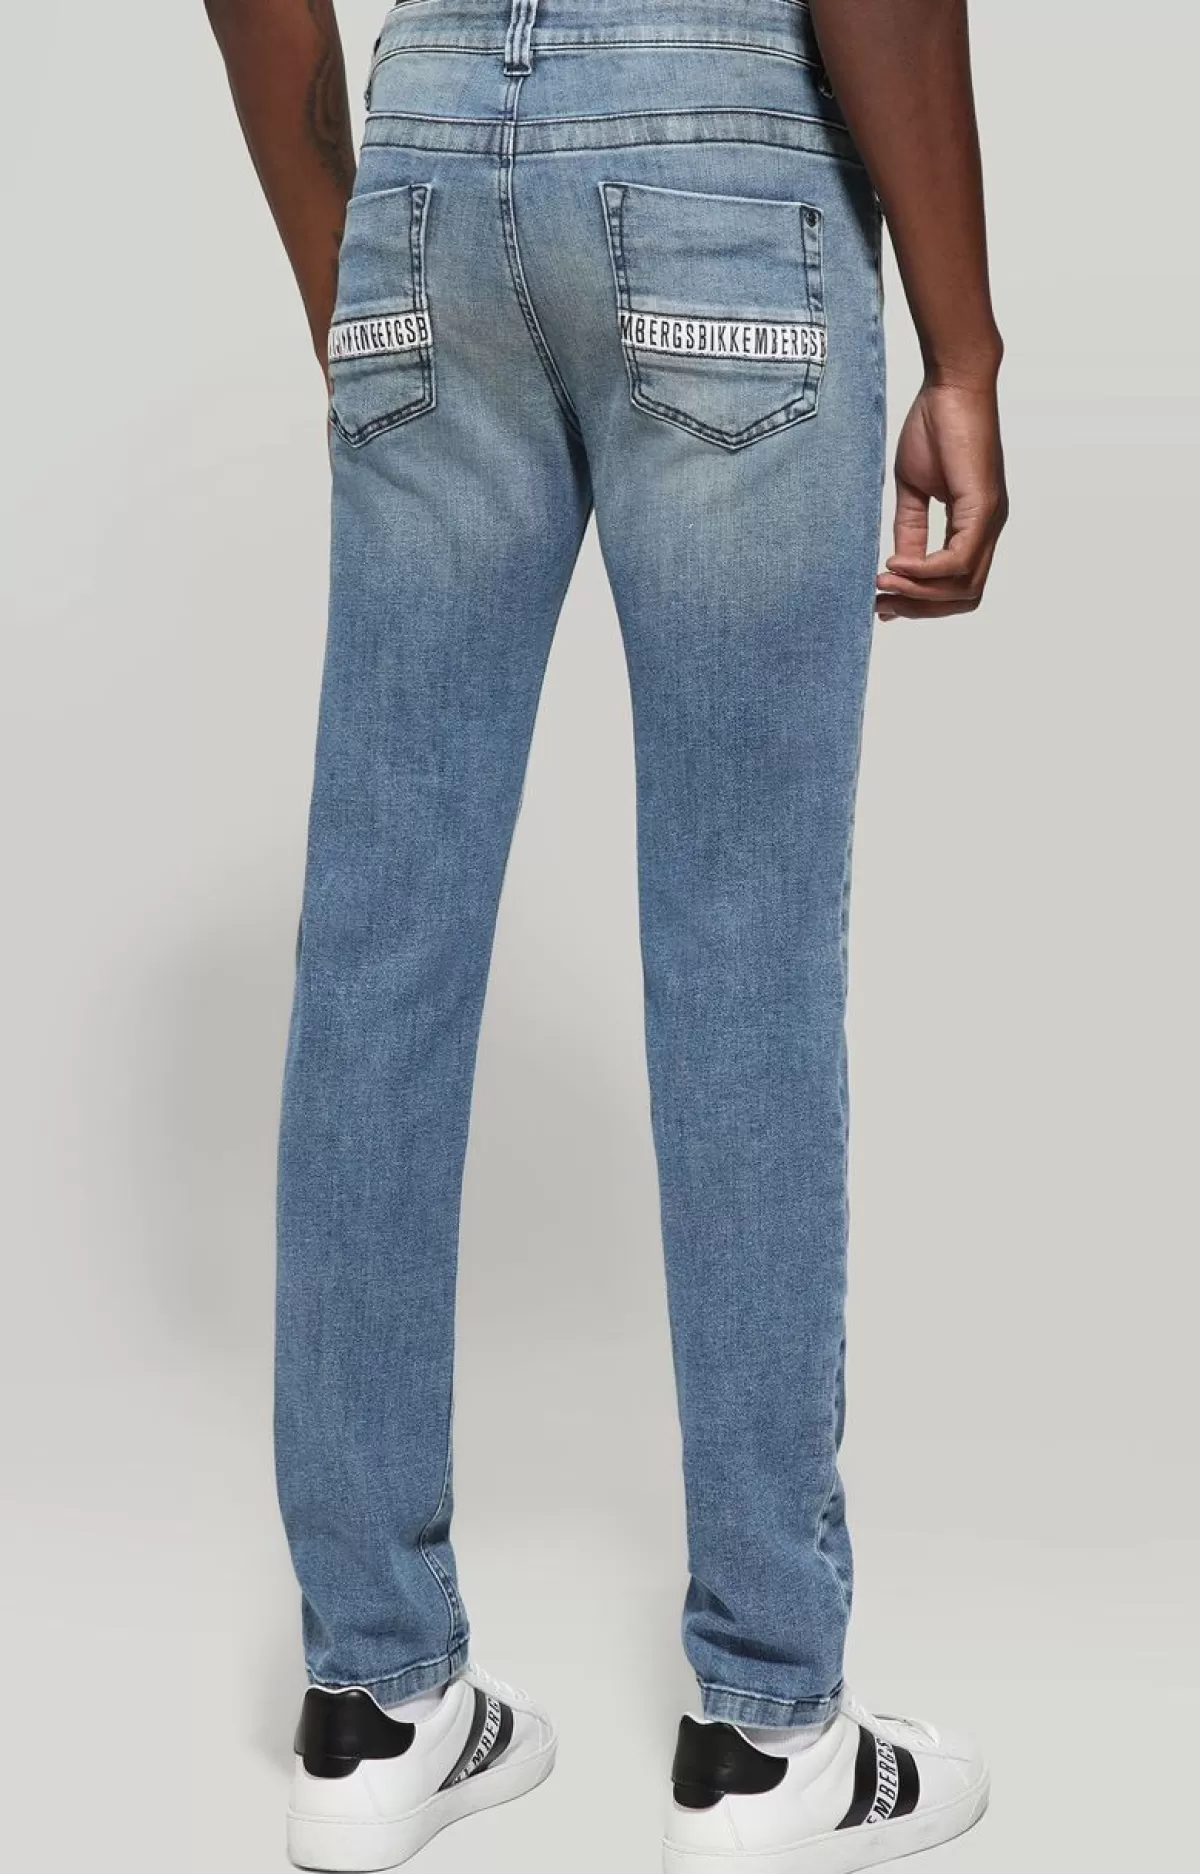 Bikkembergs Slim Fit Men'S Jeans - Linen/Cotton Blue Denim Online